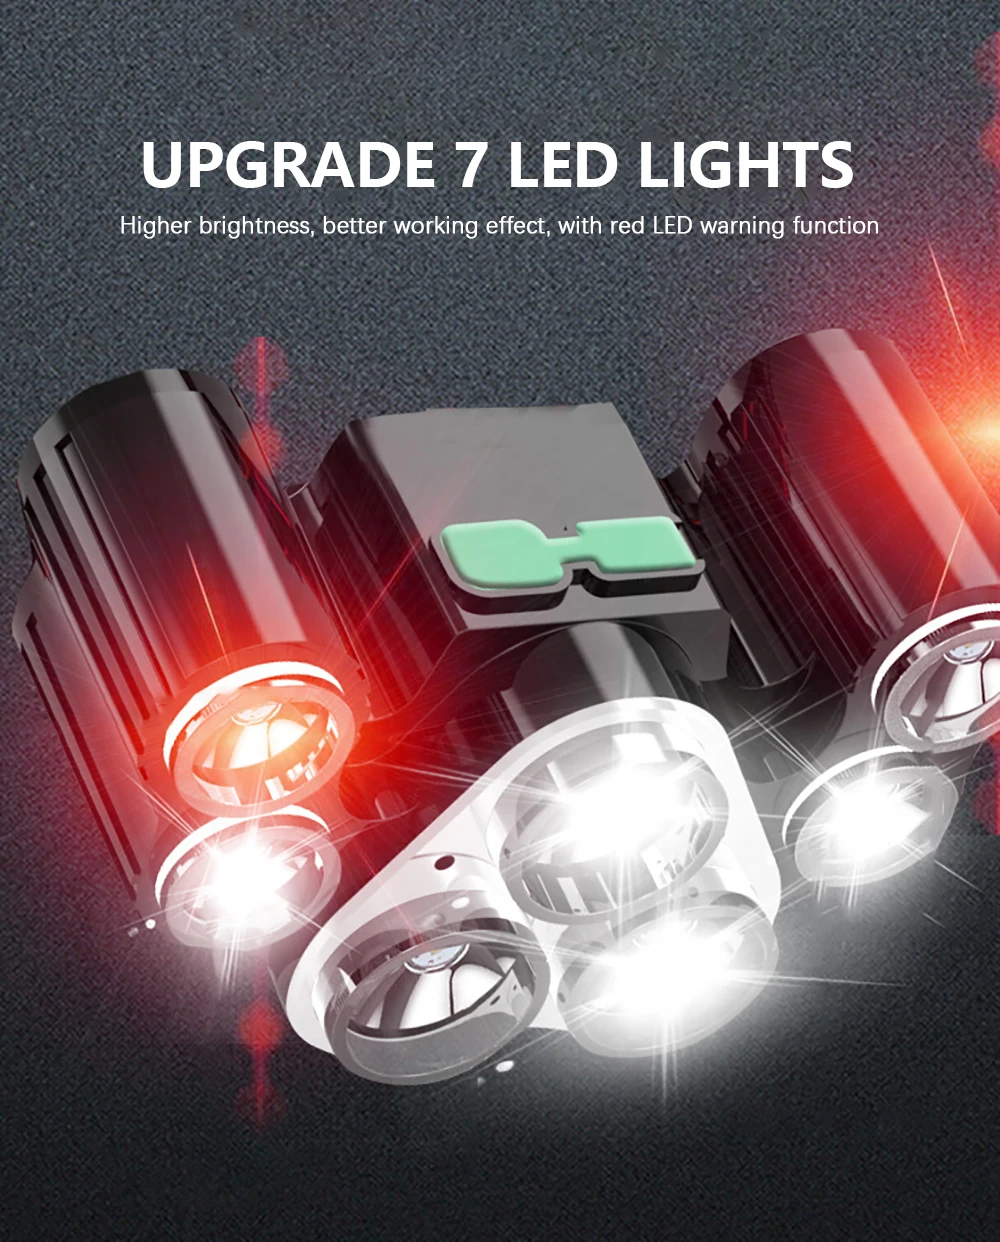 7 LED Powerful Headlamp USB Rechargeable 18650 Headlight Waterproof Camping Fishing Lantern 1000LM Mini Head Flashlight Torch enlarge